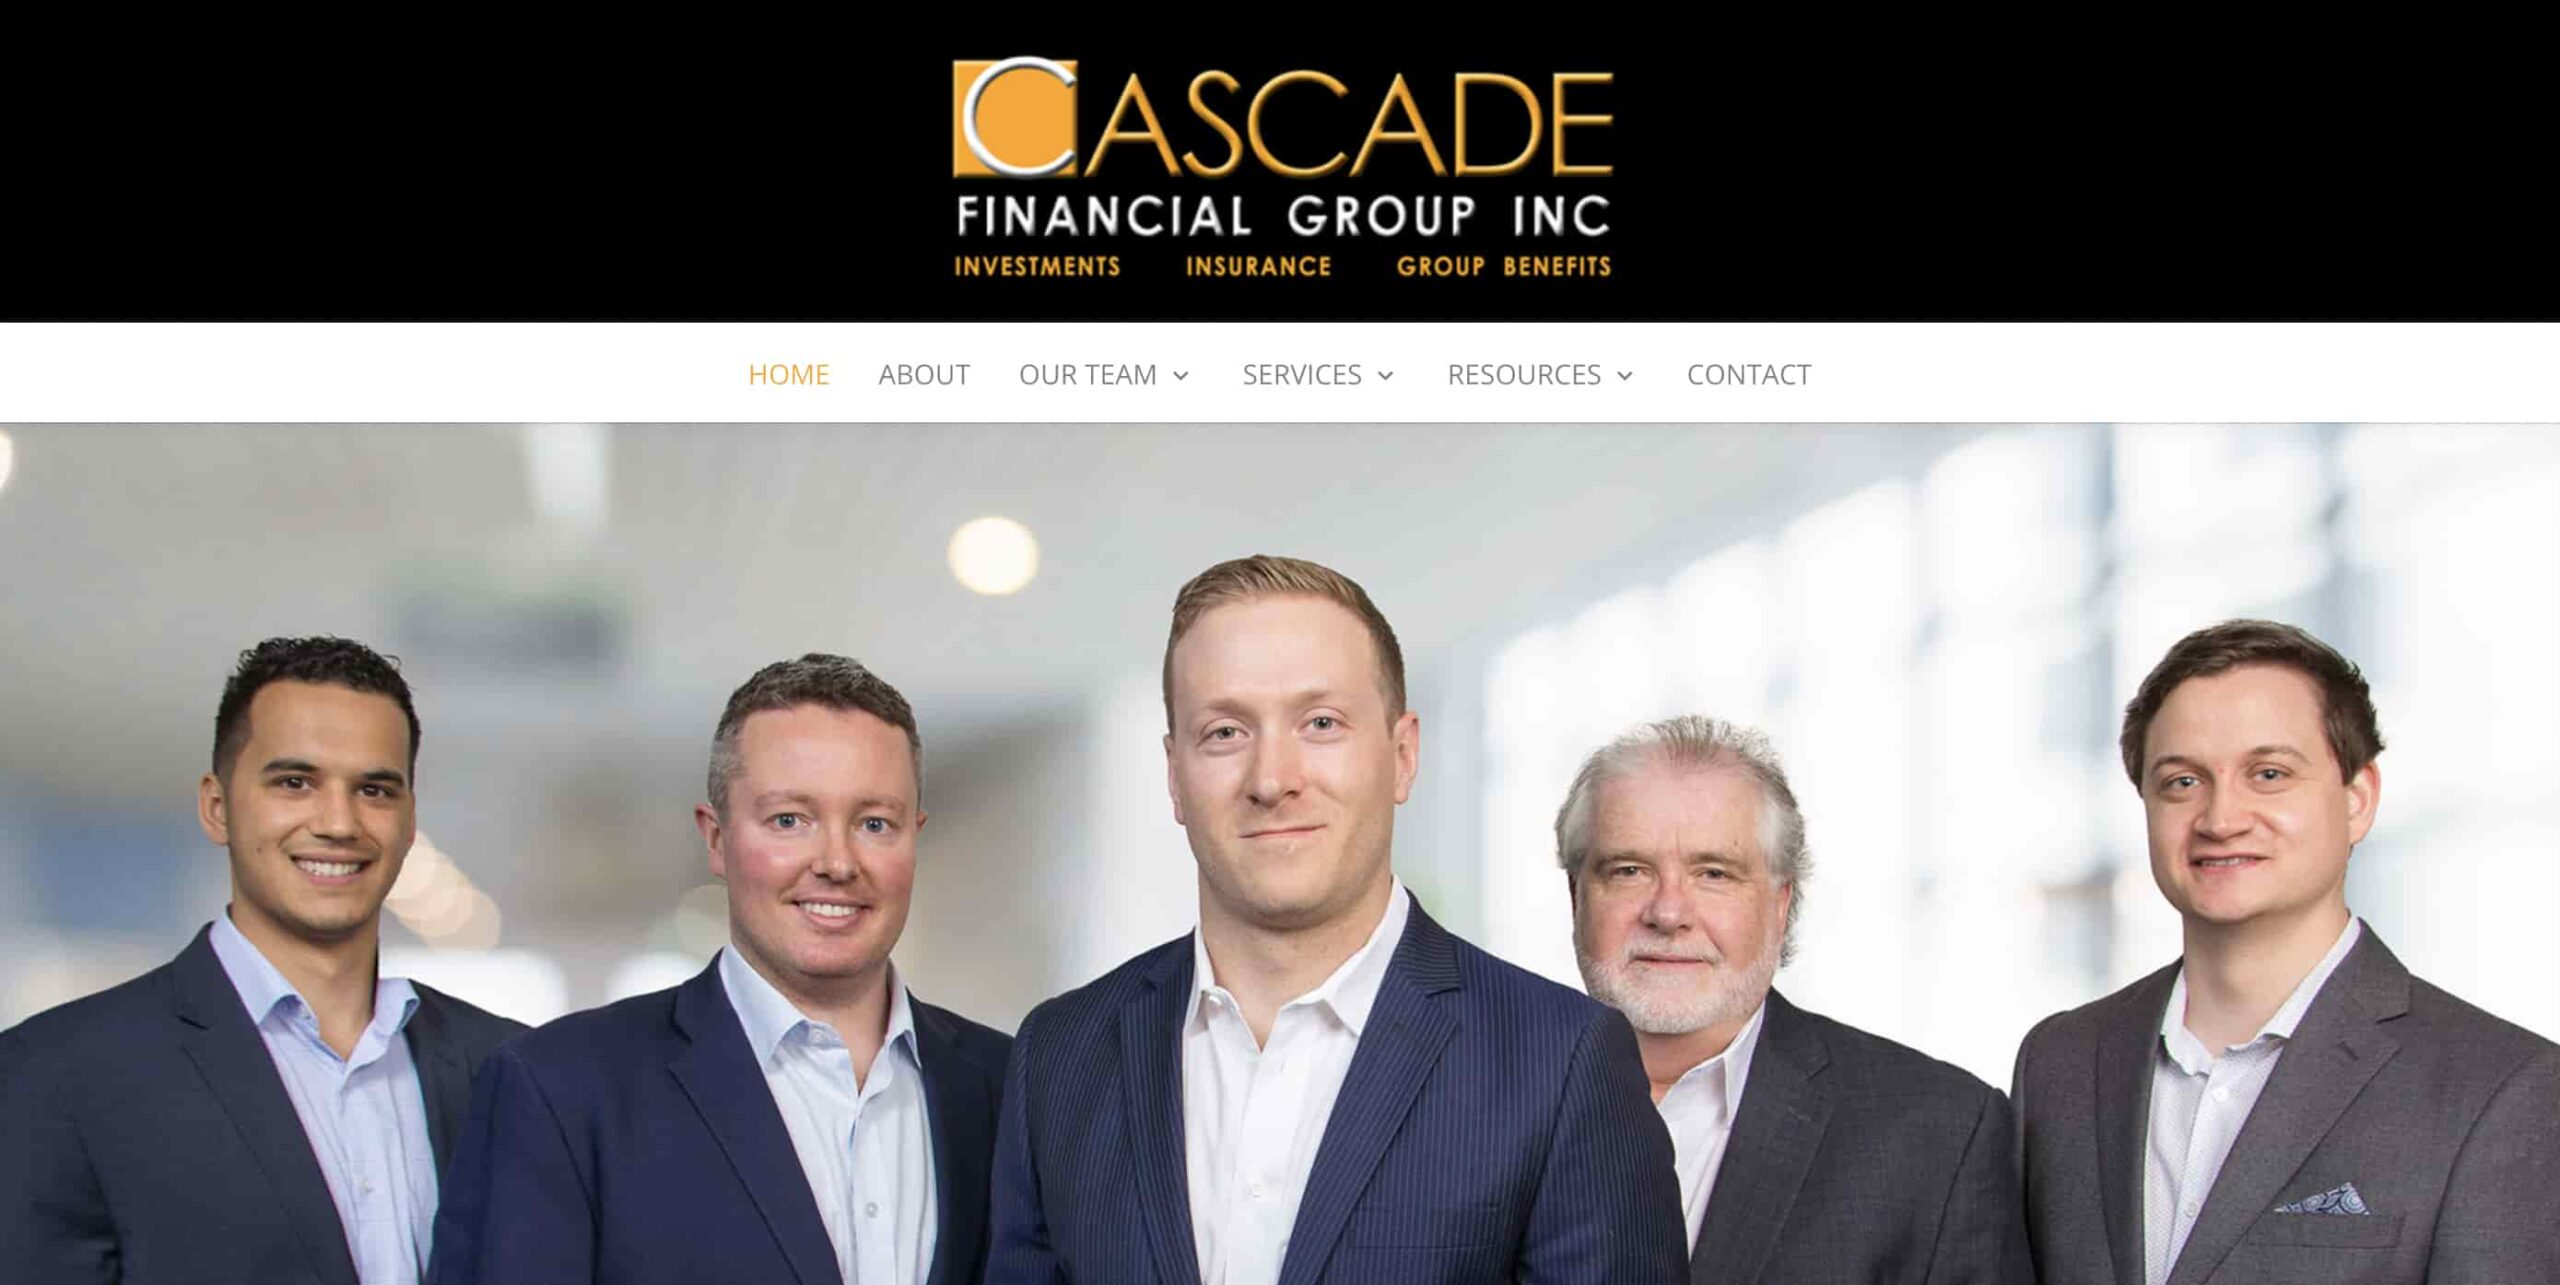 Cascade Financial Group Inc